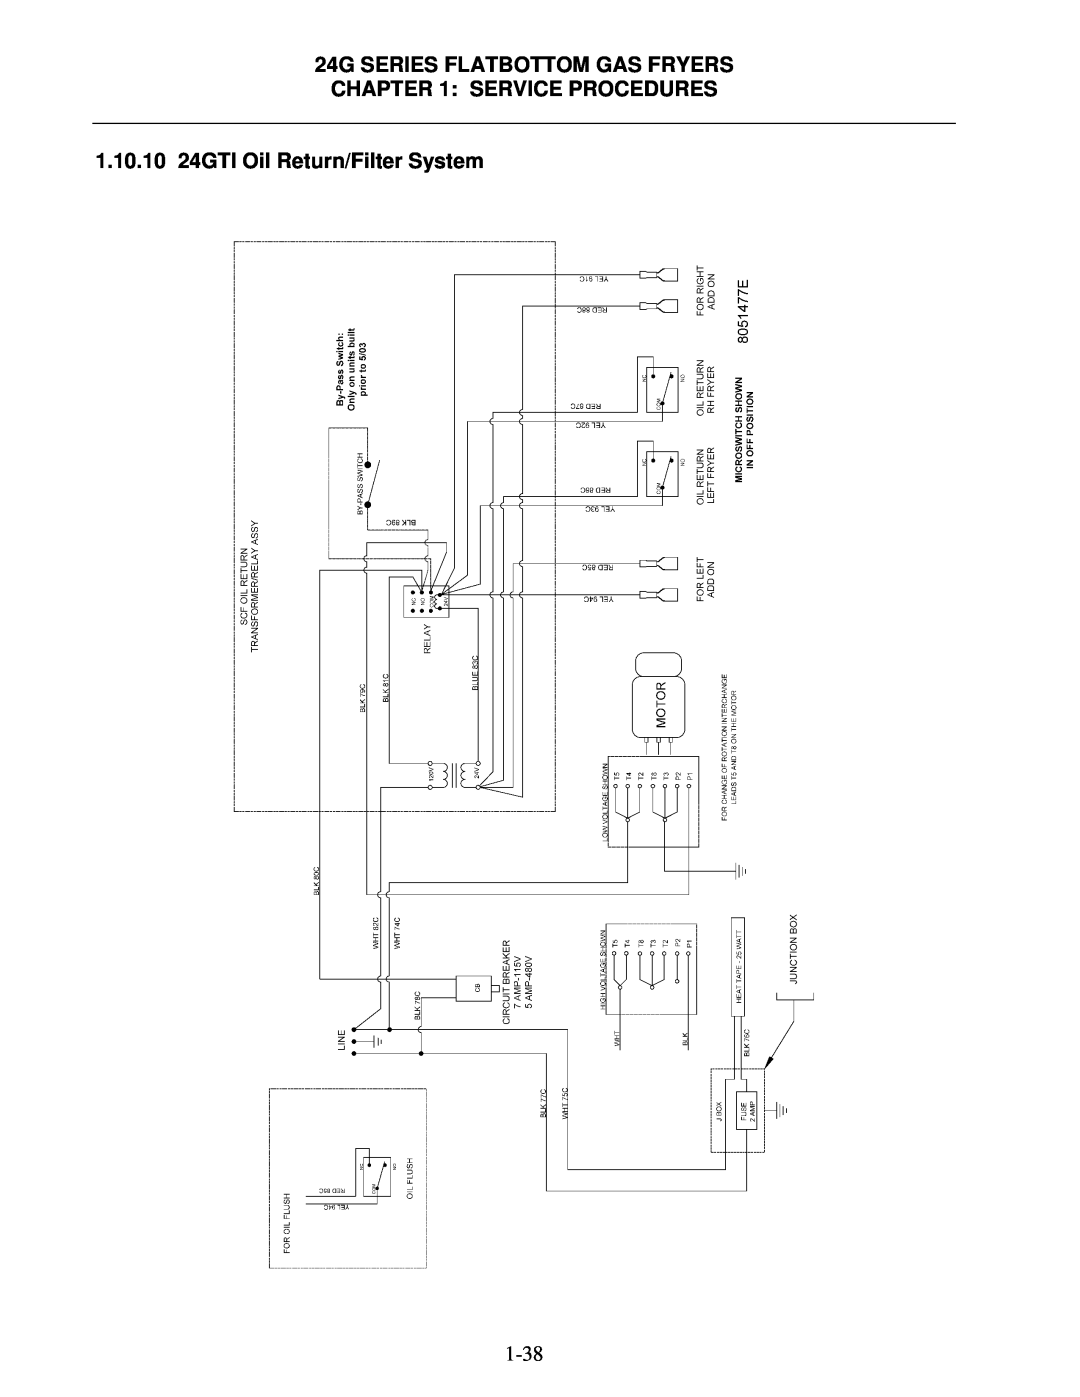 Frymaster 1824/2424G manual 1.10.10 24GTI Oil Return/Filter System, 24G SERIES FLATBOTTOM GAS FRYERS SERVICE PROCEDURES 